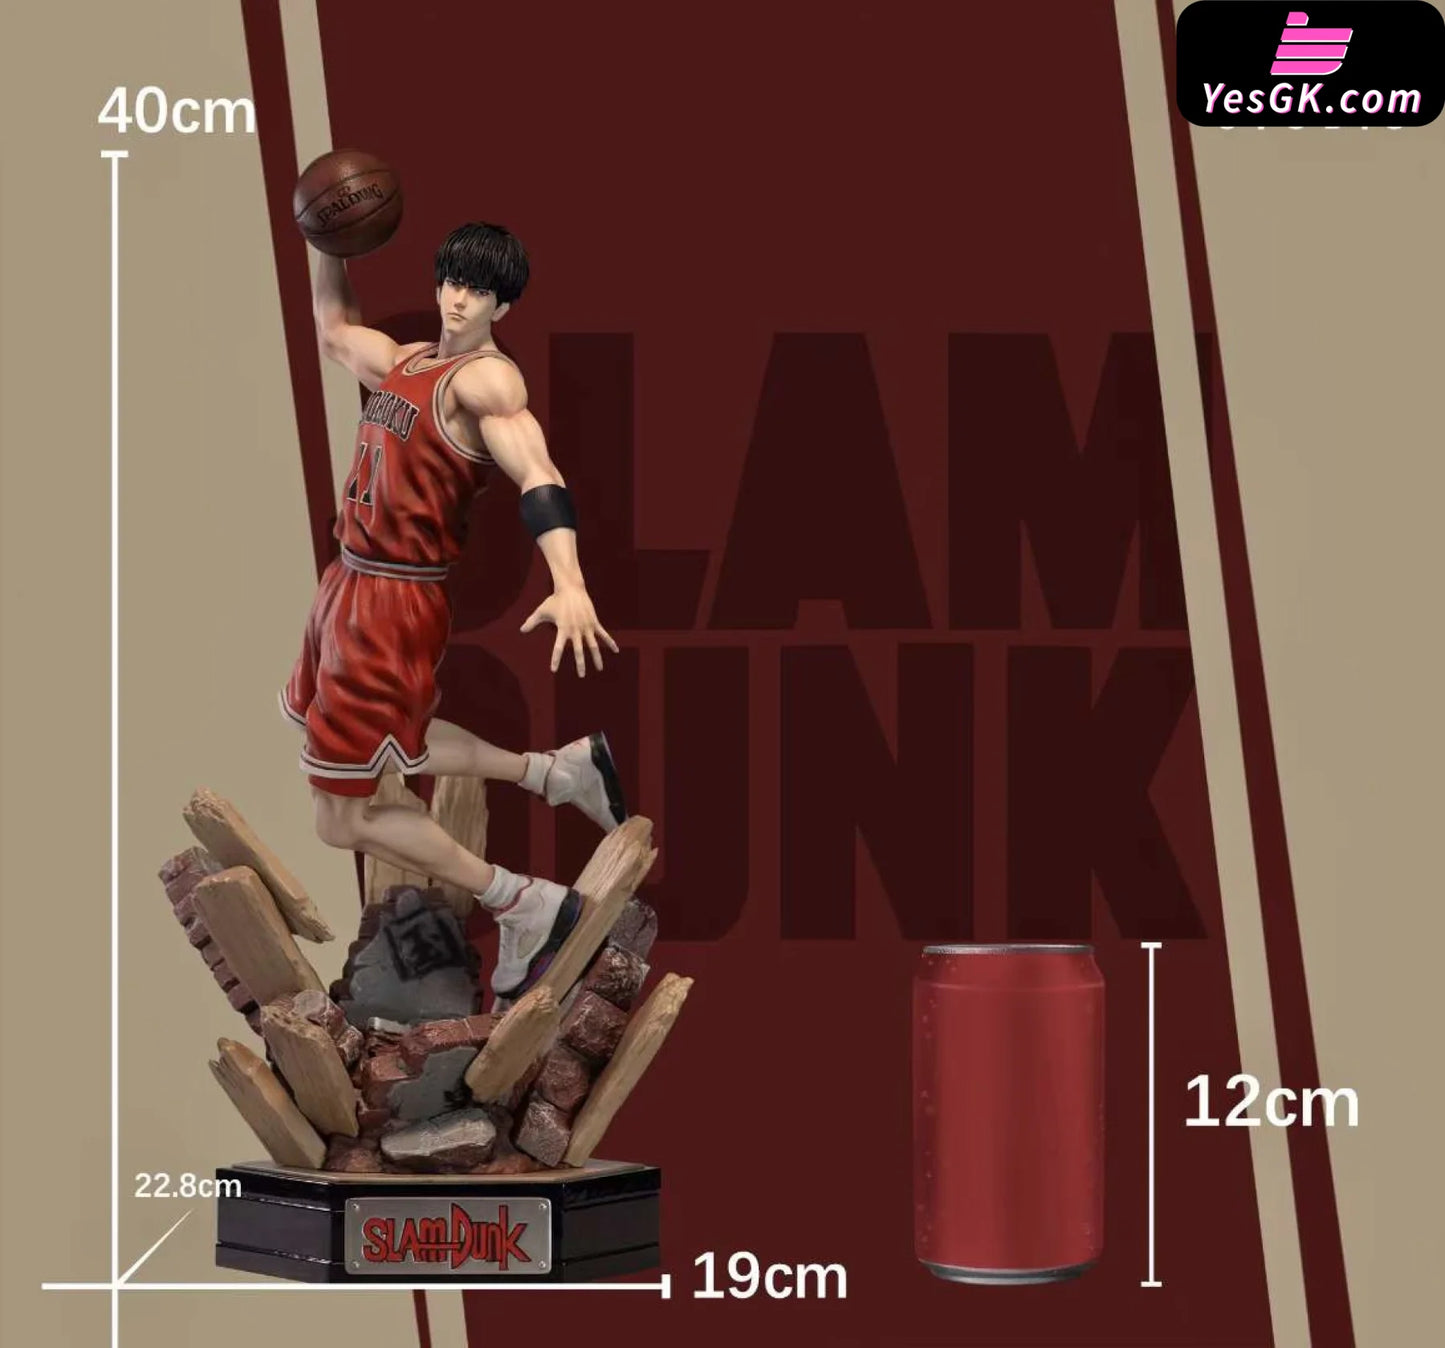 Slam Dunk #1 Kaede Rukawa Resin Statue - Xipo Studio [Pre-Order]